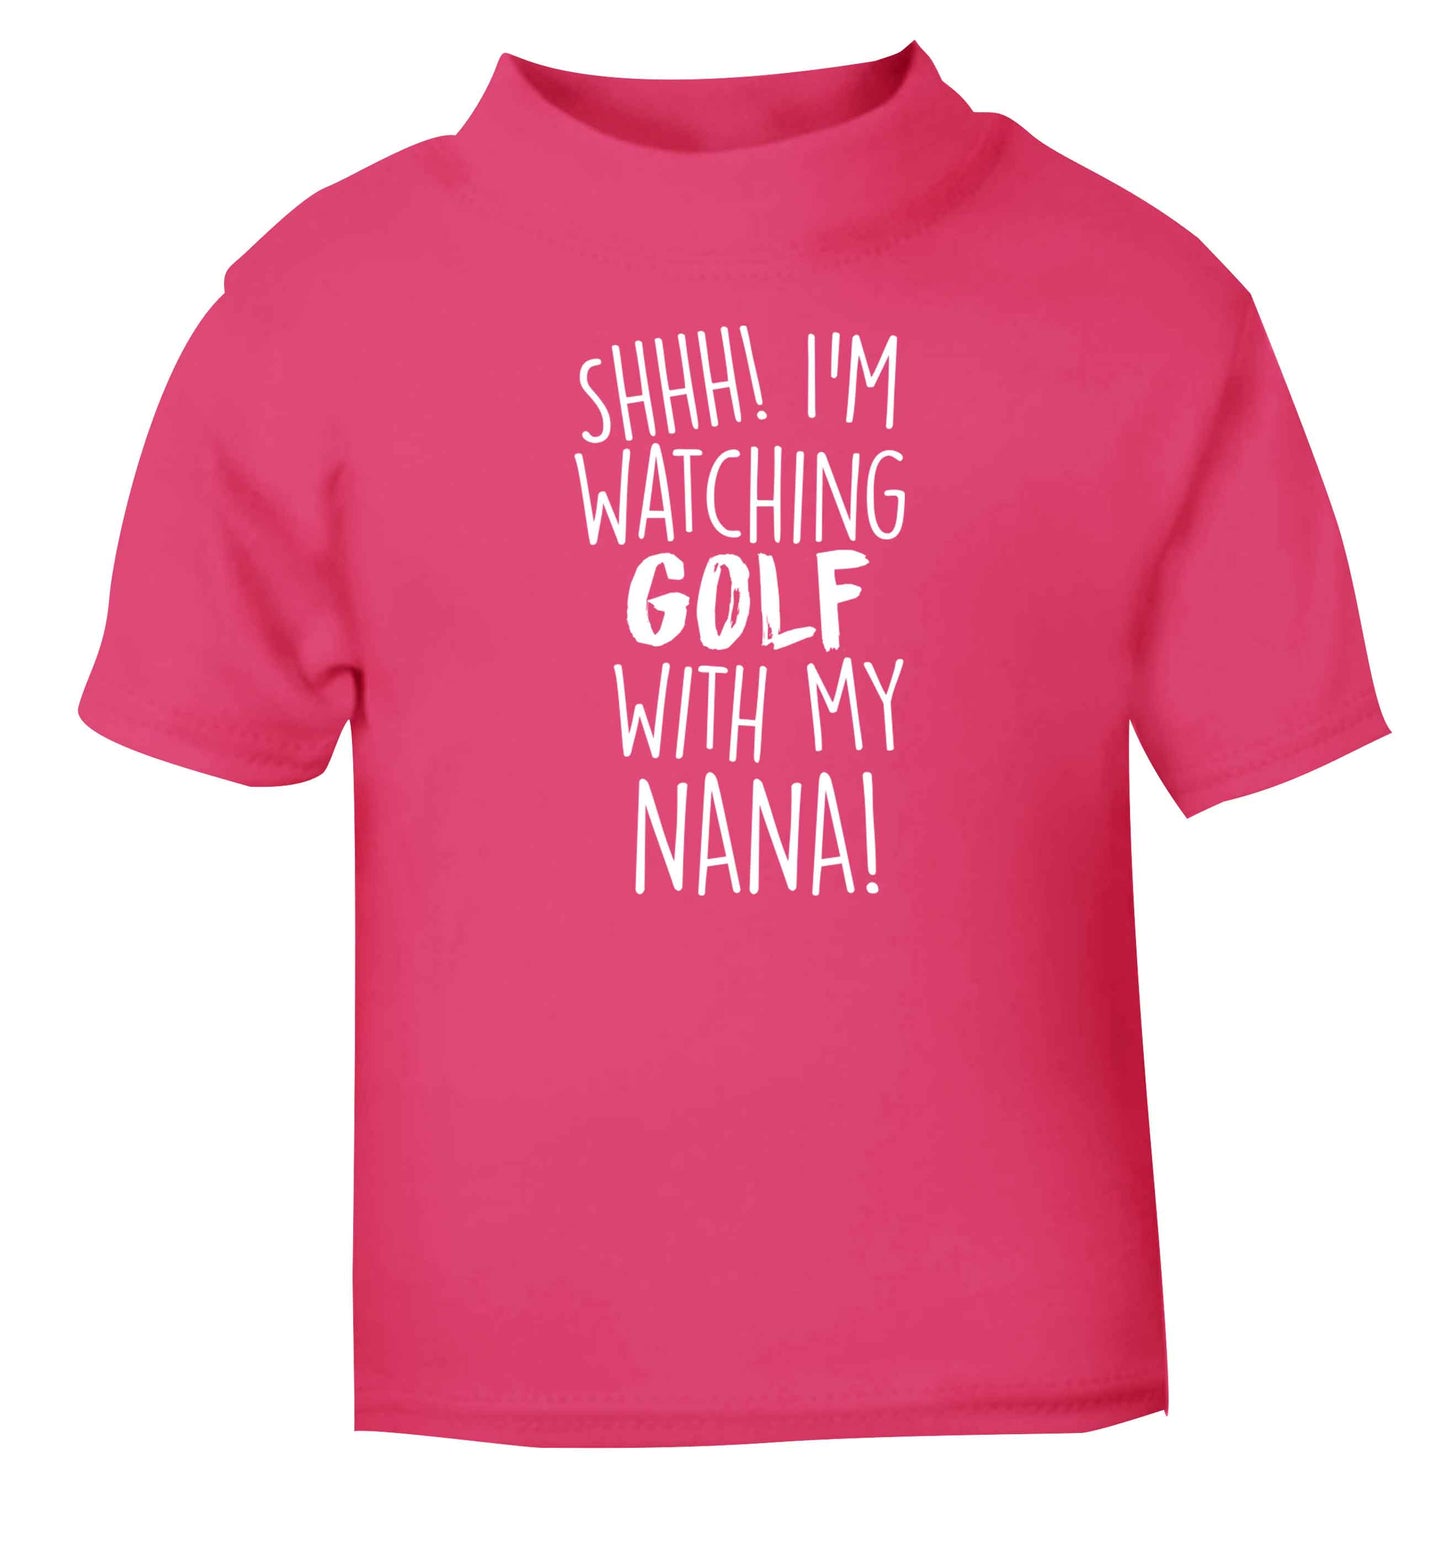 Shh I'm watching golf with my nana pink Baby Toddler Tshirt 2 Years